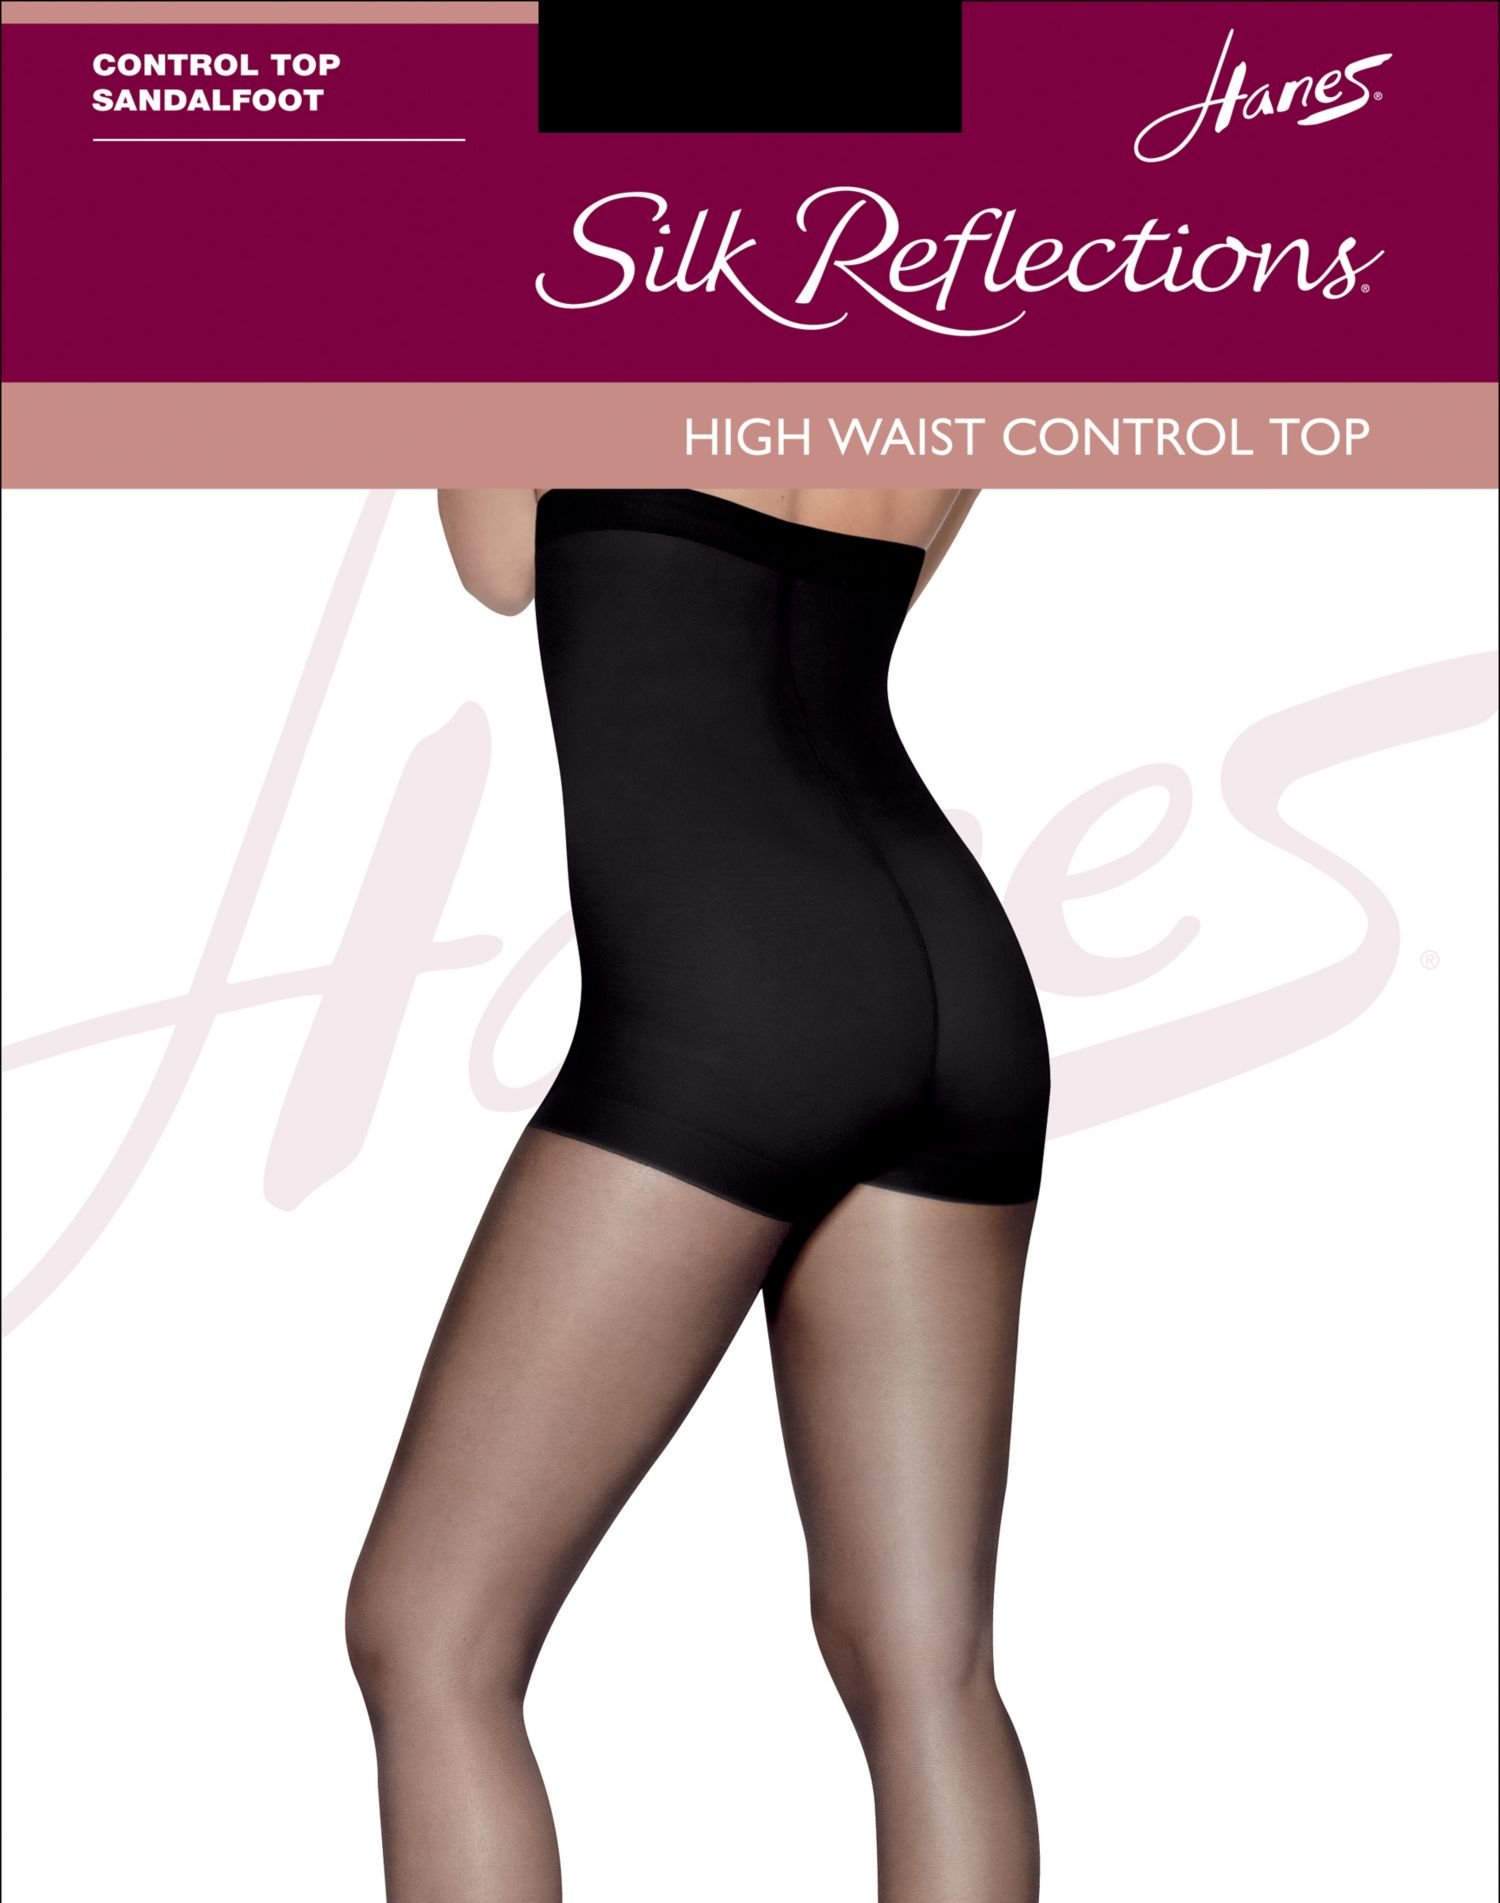 Hanes Silk Reflections Women's High Waist Control Top Sandalfoot Pantyhose